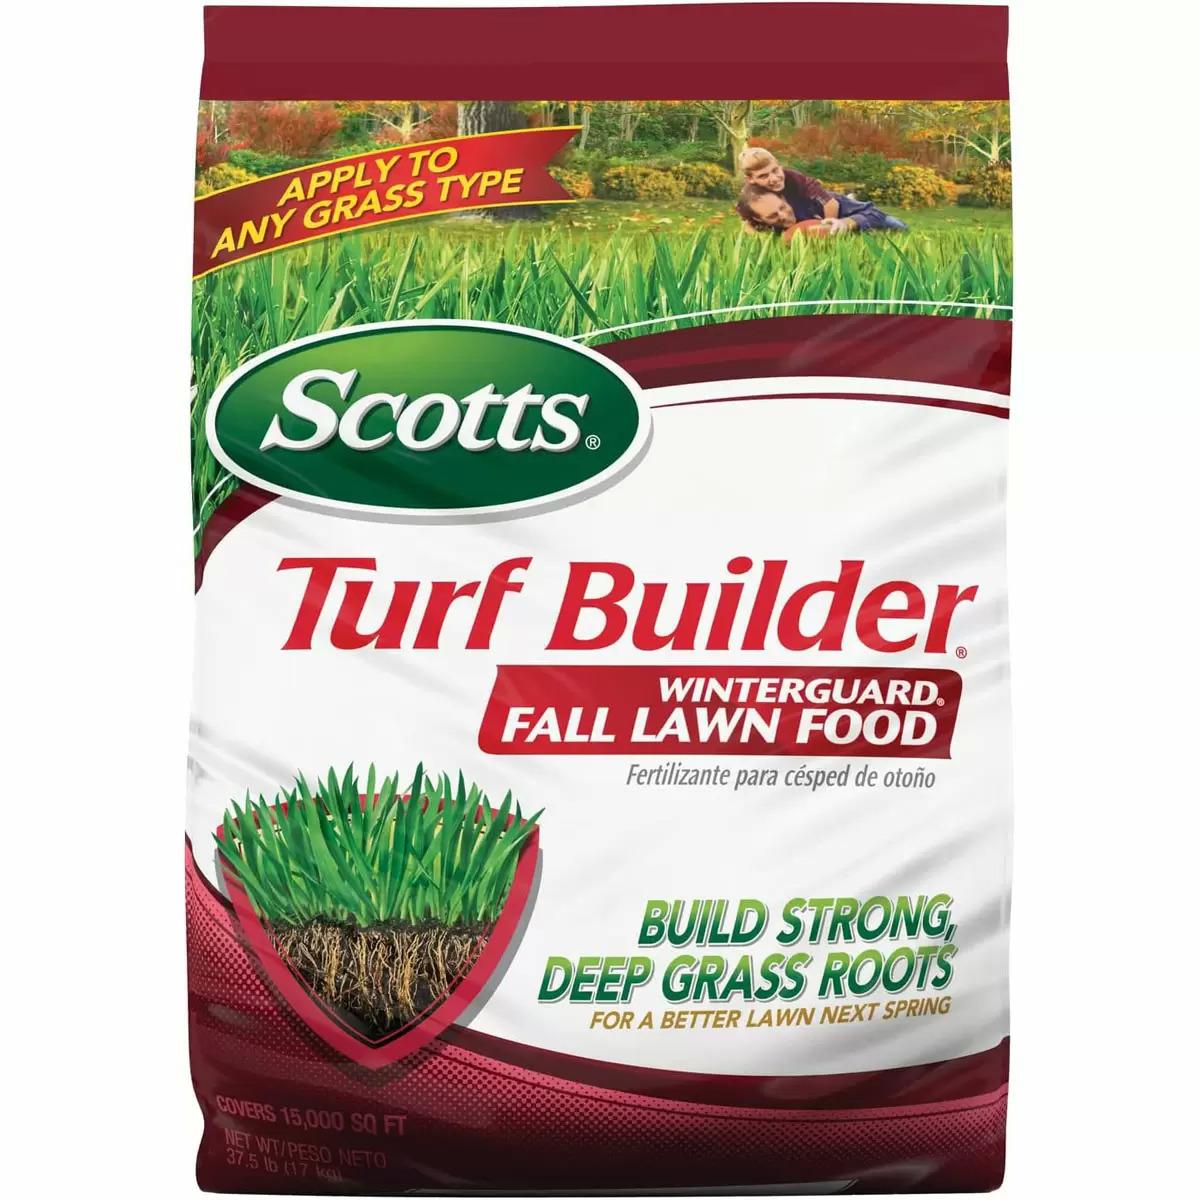 Scotts Turf Builder WinterGuard Fall Lawn Food Fertilizer for $46.48 Shipped